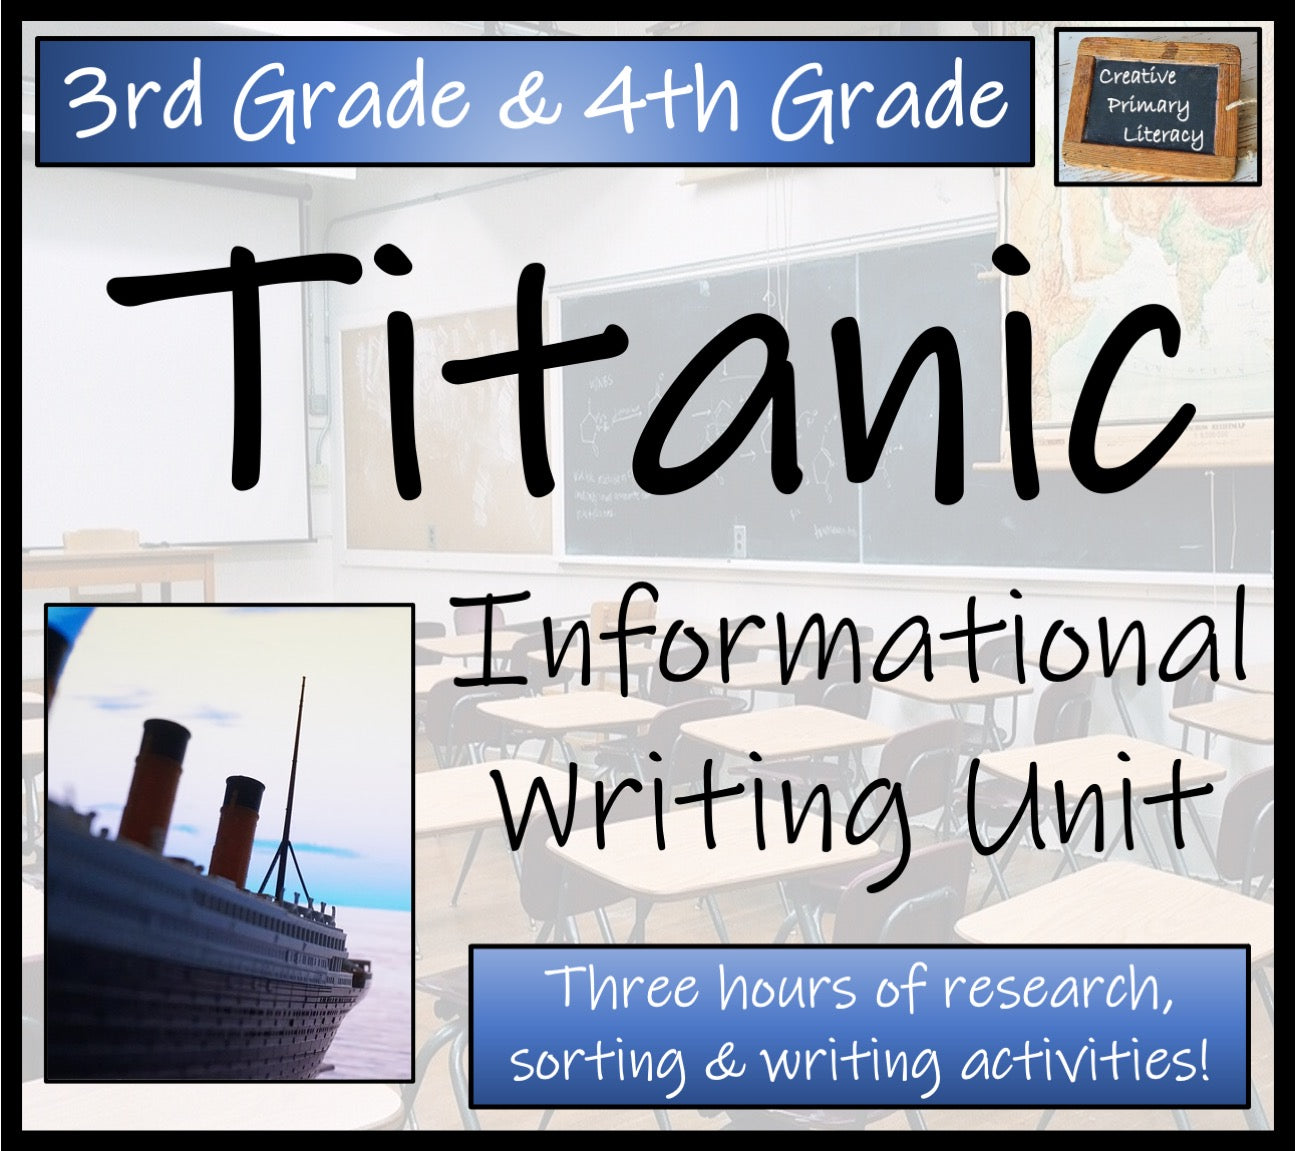 Titanic Informational Writing Unit | 3rd Grade & 4th Grade